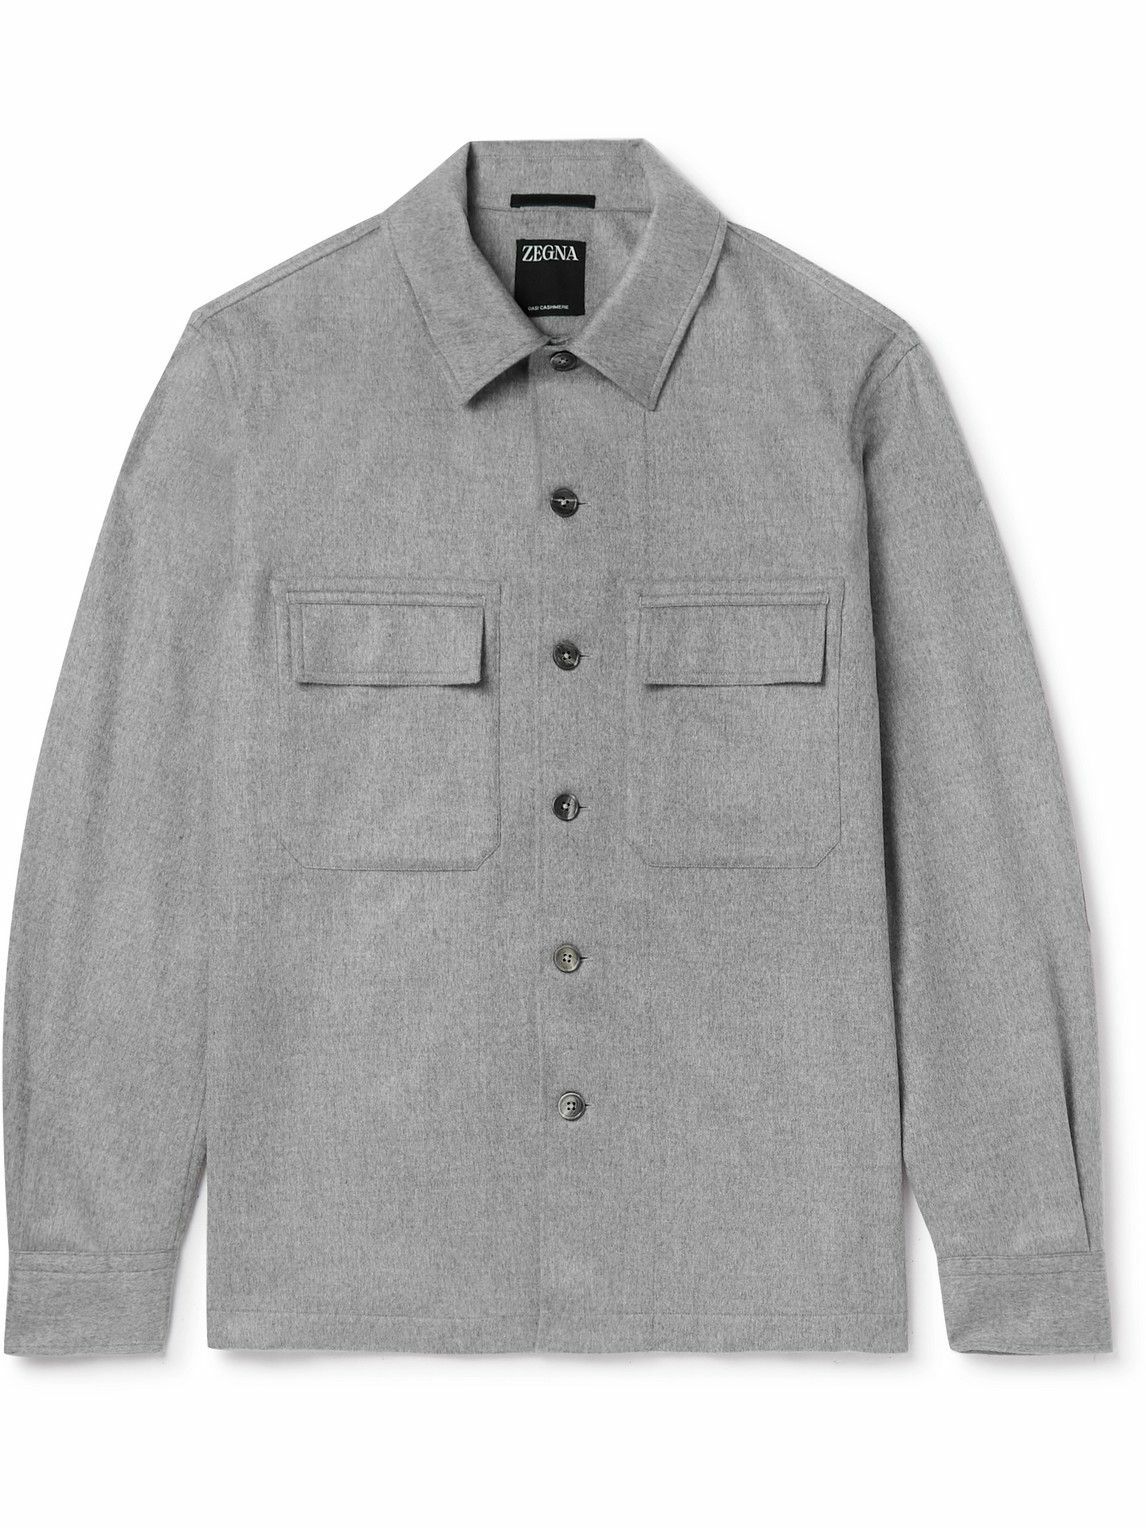 Zegna - Cashmere Overshirt - Gray